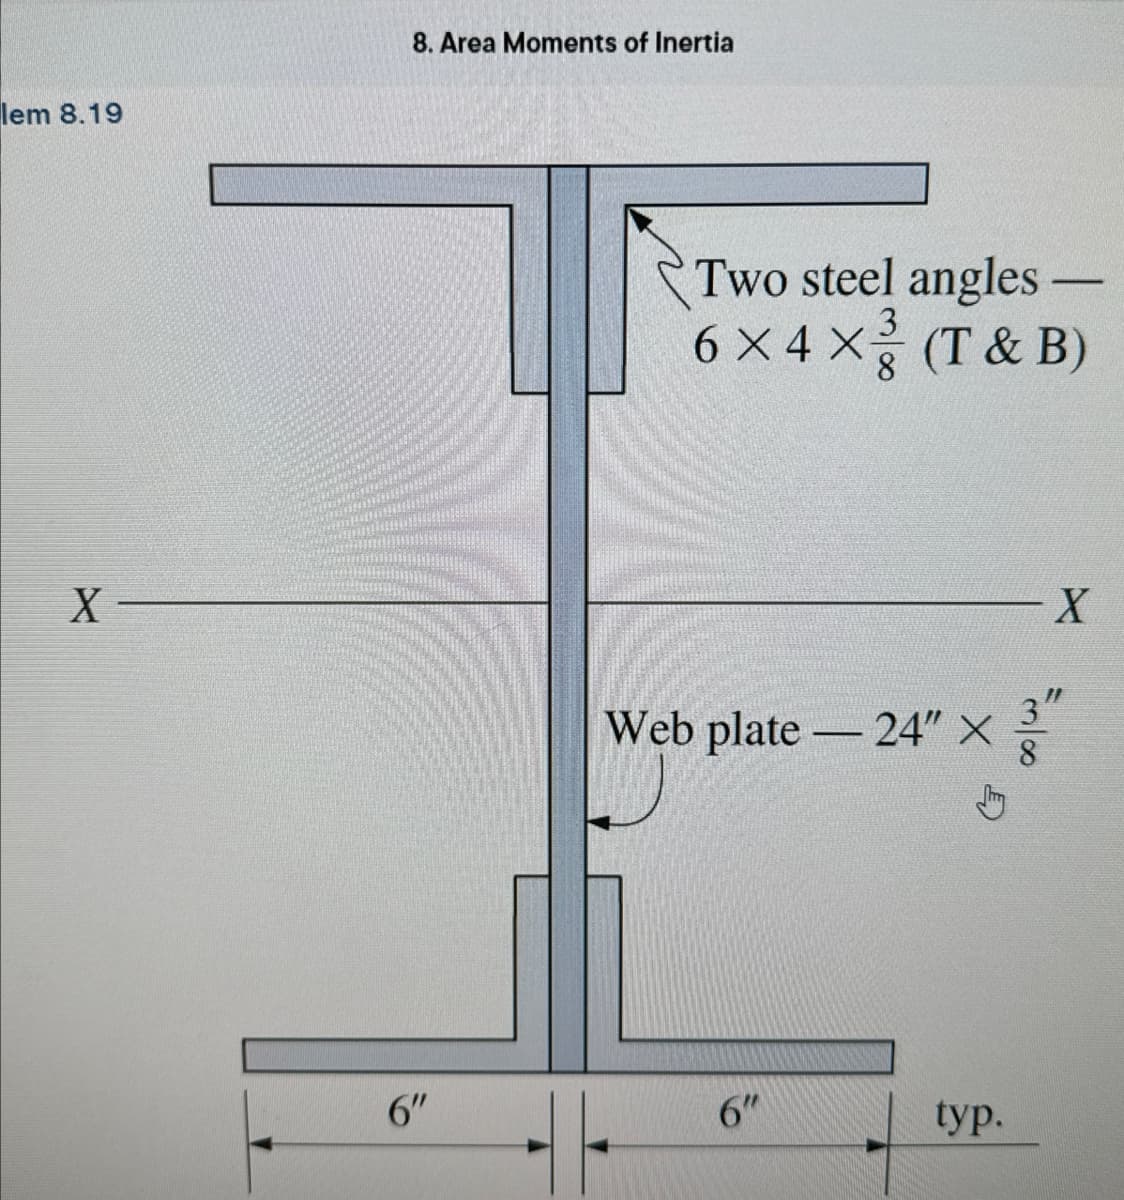 lem 8.19
8. Area Moments of Inertia
Two steel angles -
6 X4 X
3
8
(T& B)
X-
Web plate 24" X
-
6"
6"
typ.
88
X